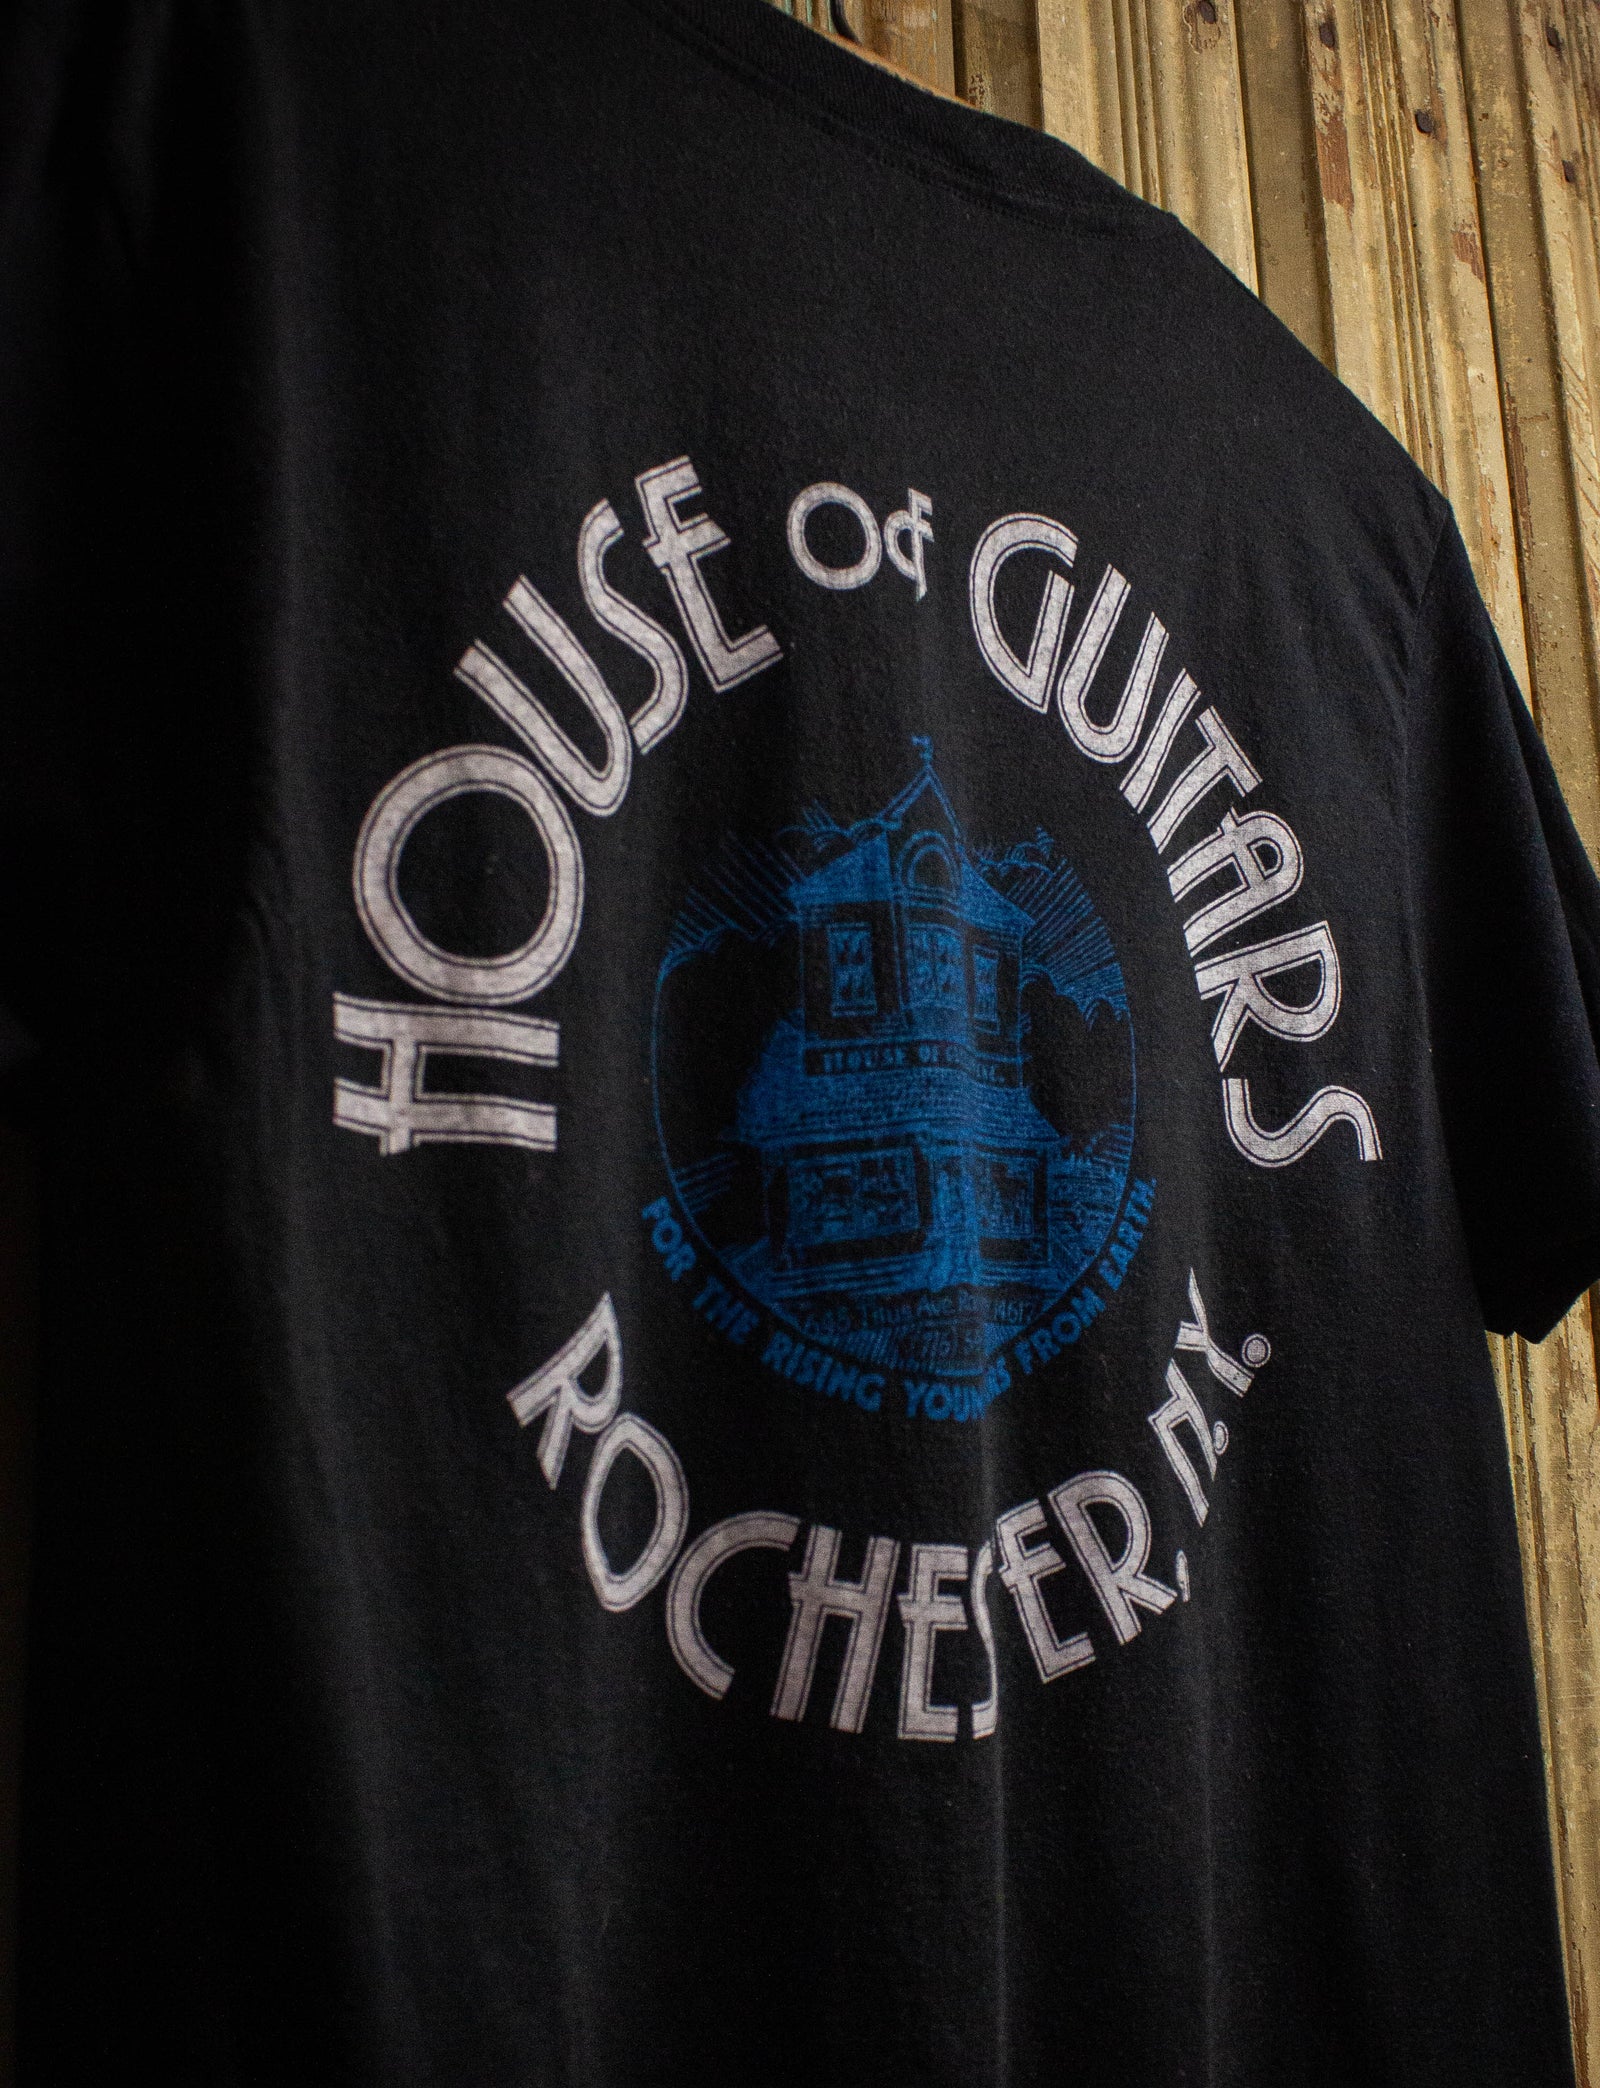 Vintage House Of Guitars Rochester New York Graphic T Shirt 80s Black Medium